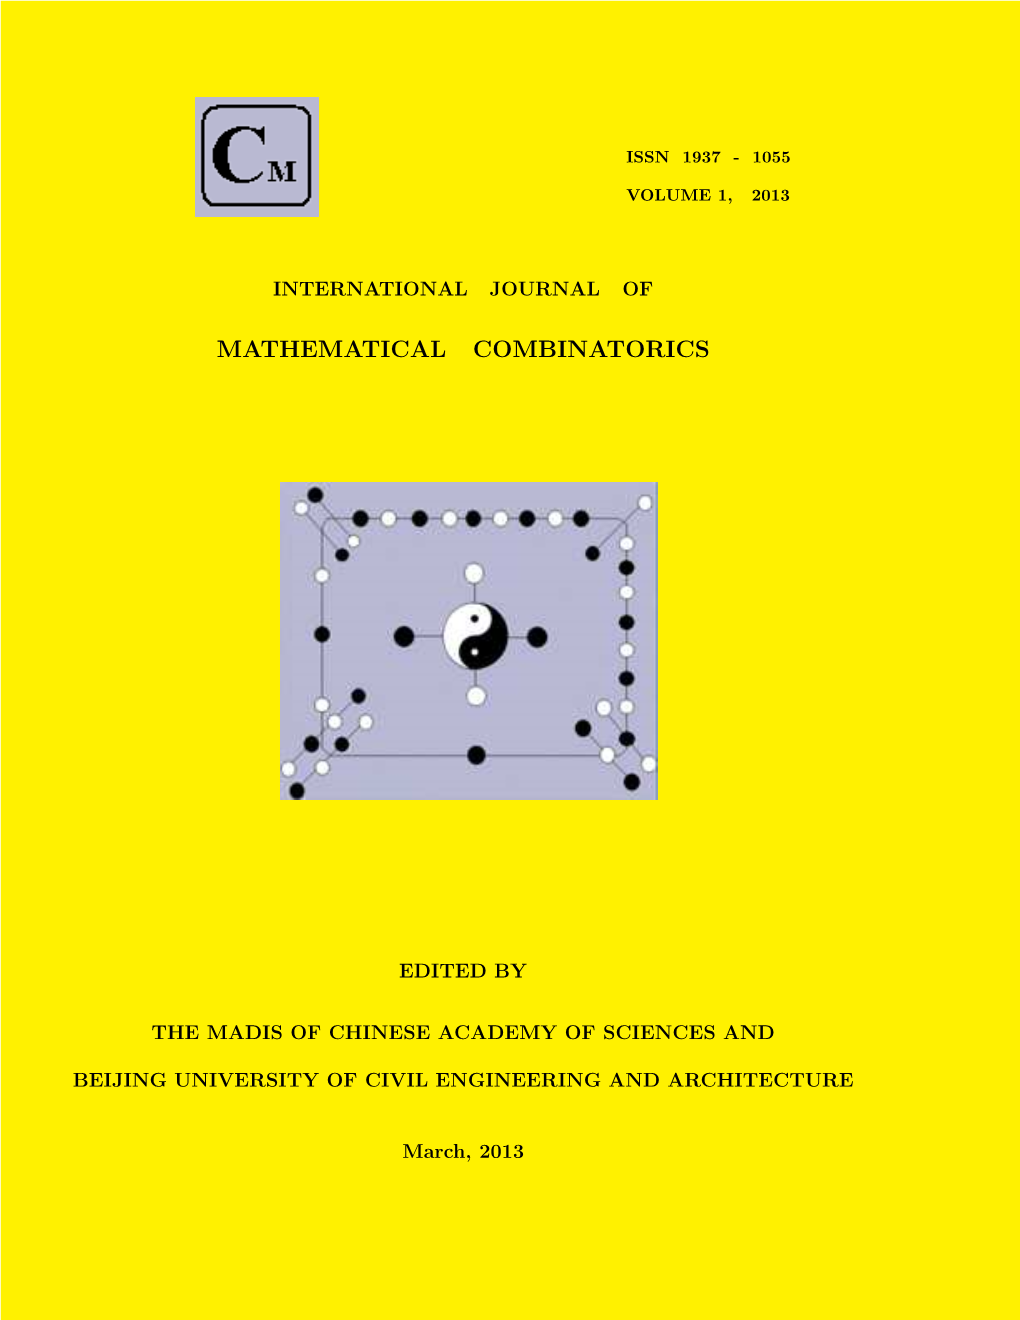 Mathematical Combinatorics